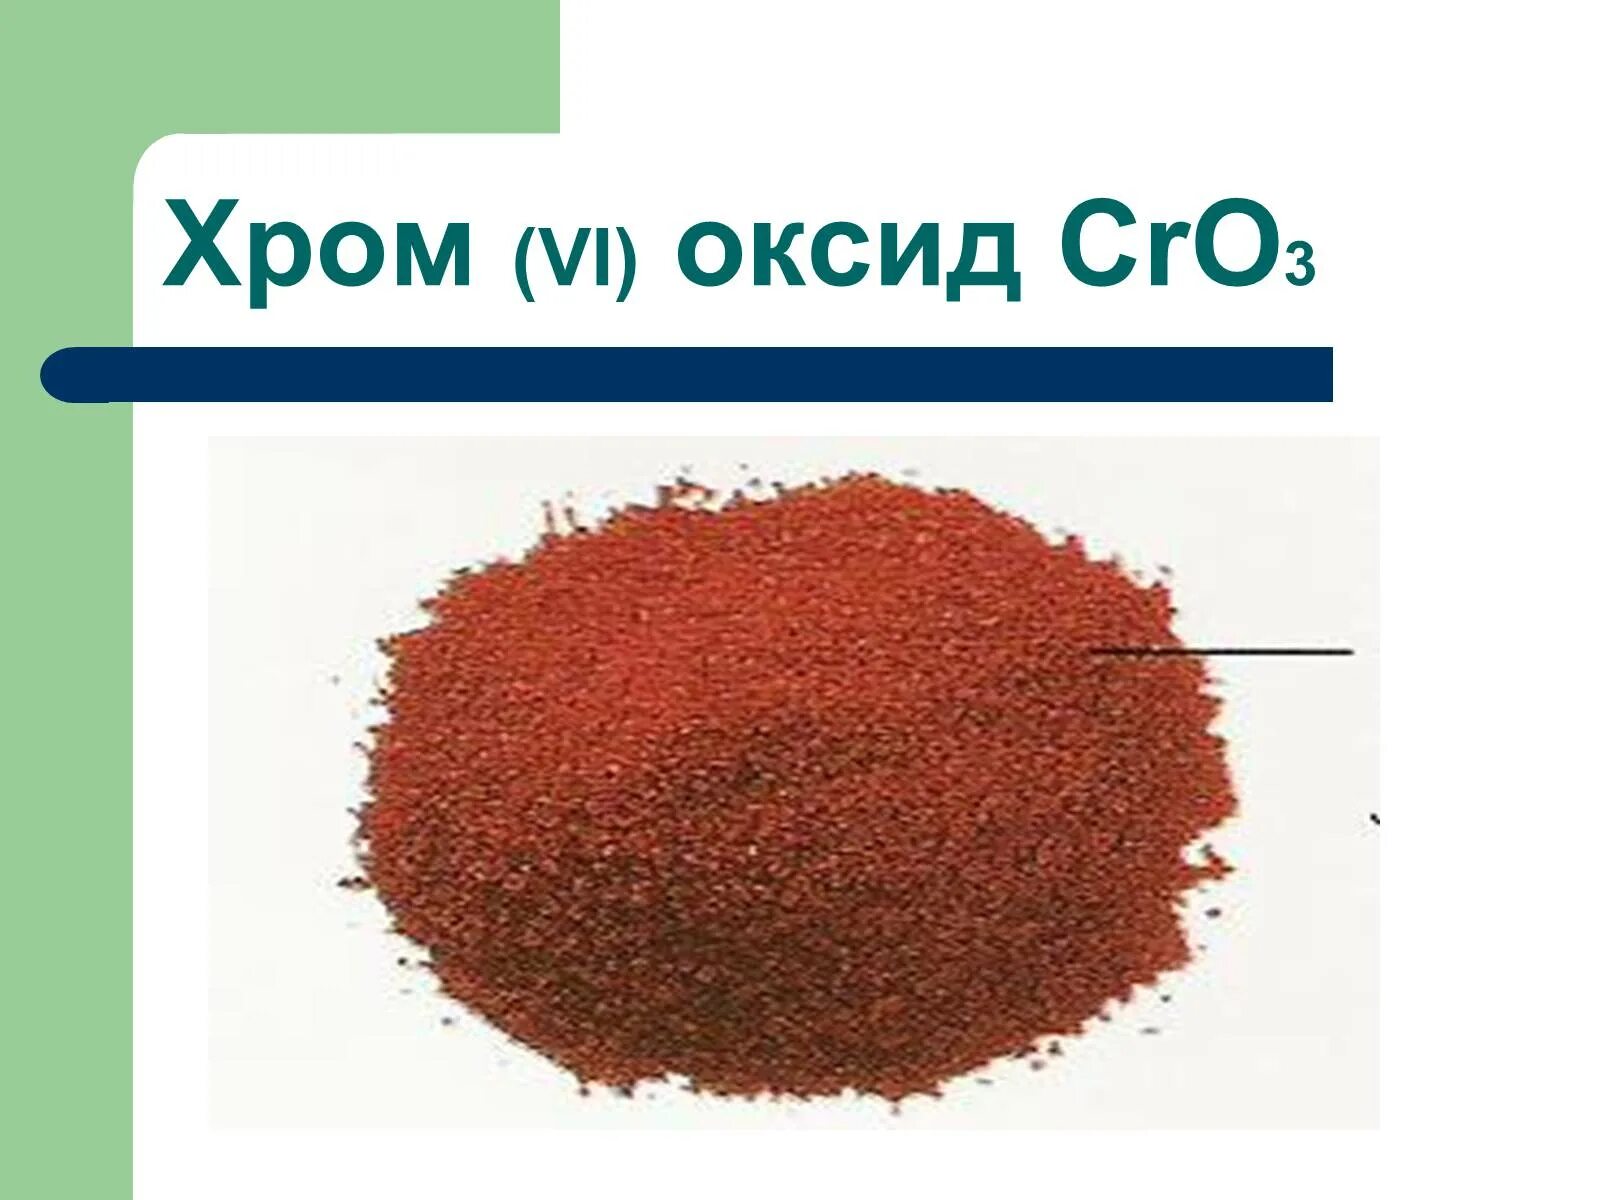 Оксид хрома cro3. Оксид хрома 2. Оксид хрома 2 цвет. Оксид хрома цвет. Оксид хрома 4 гидроксид натрия